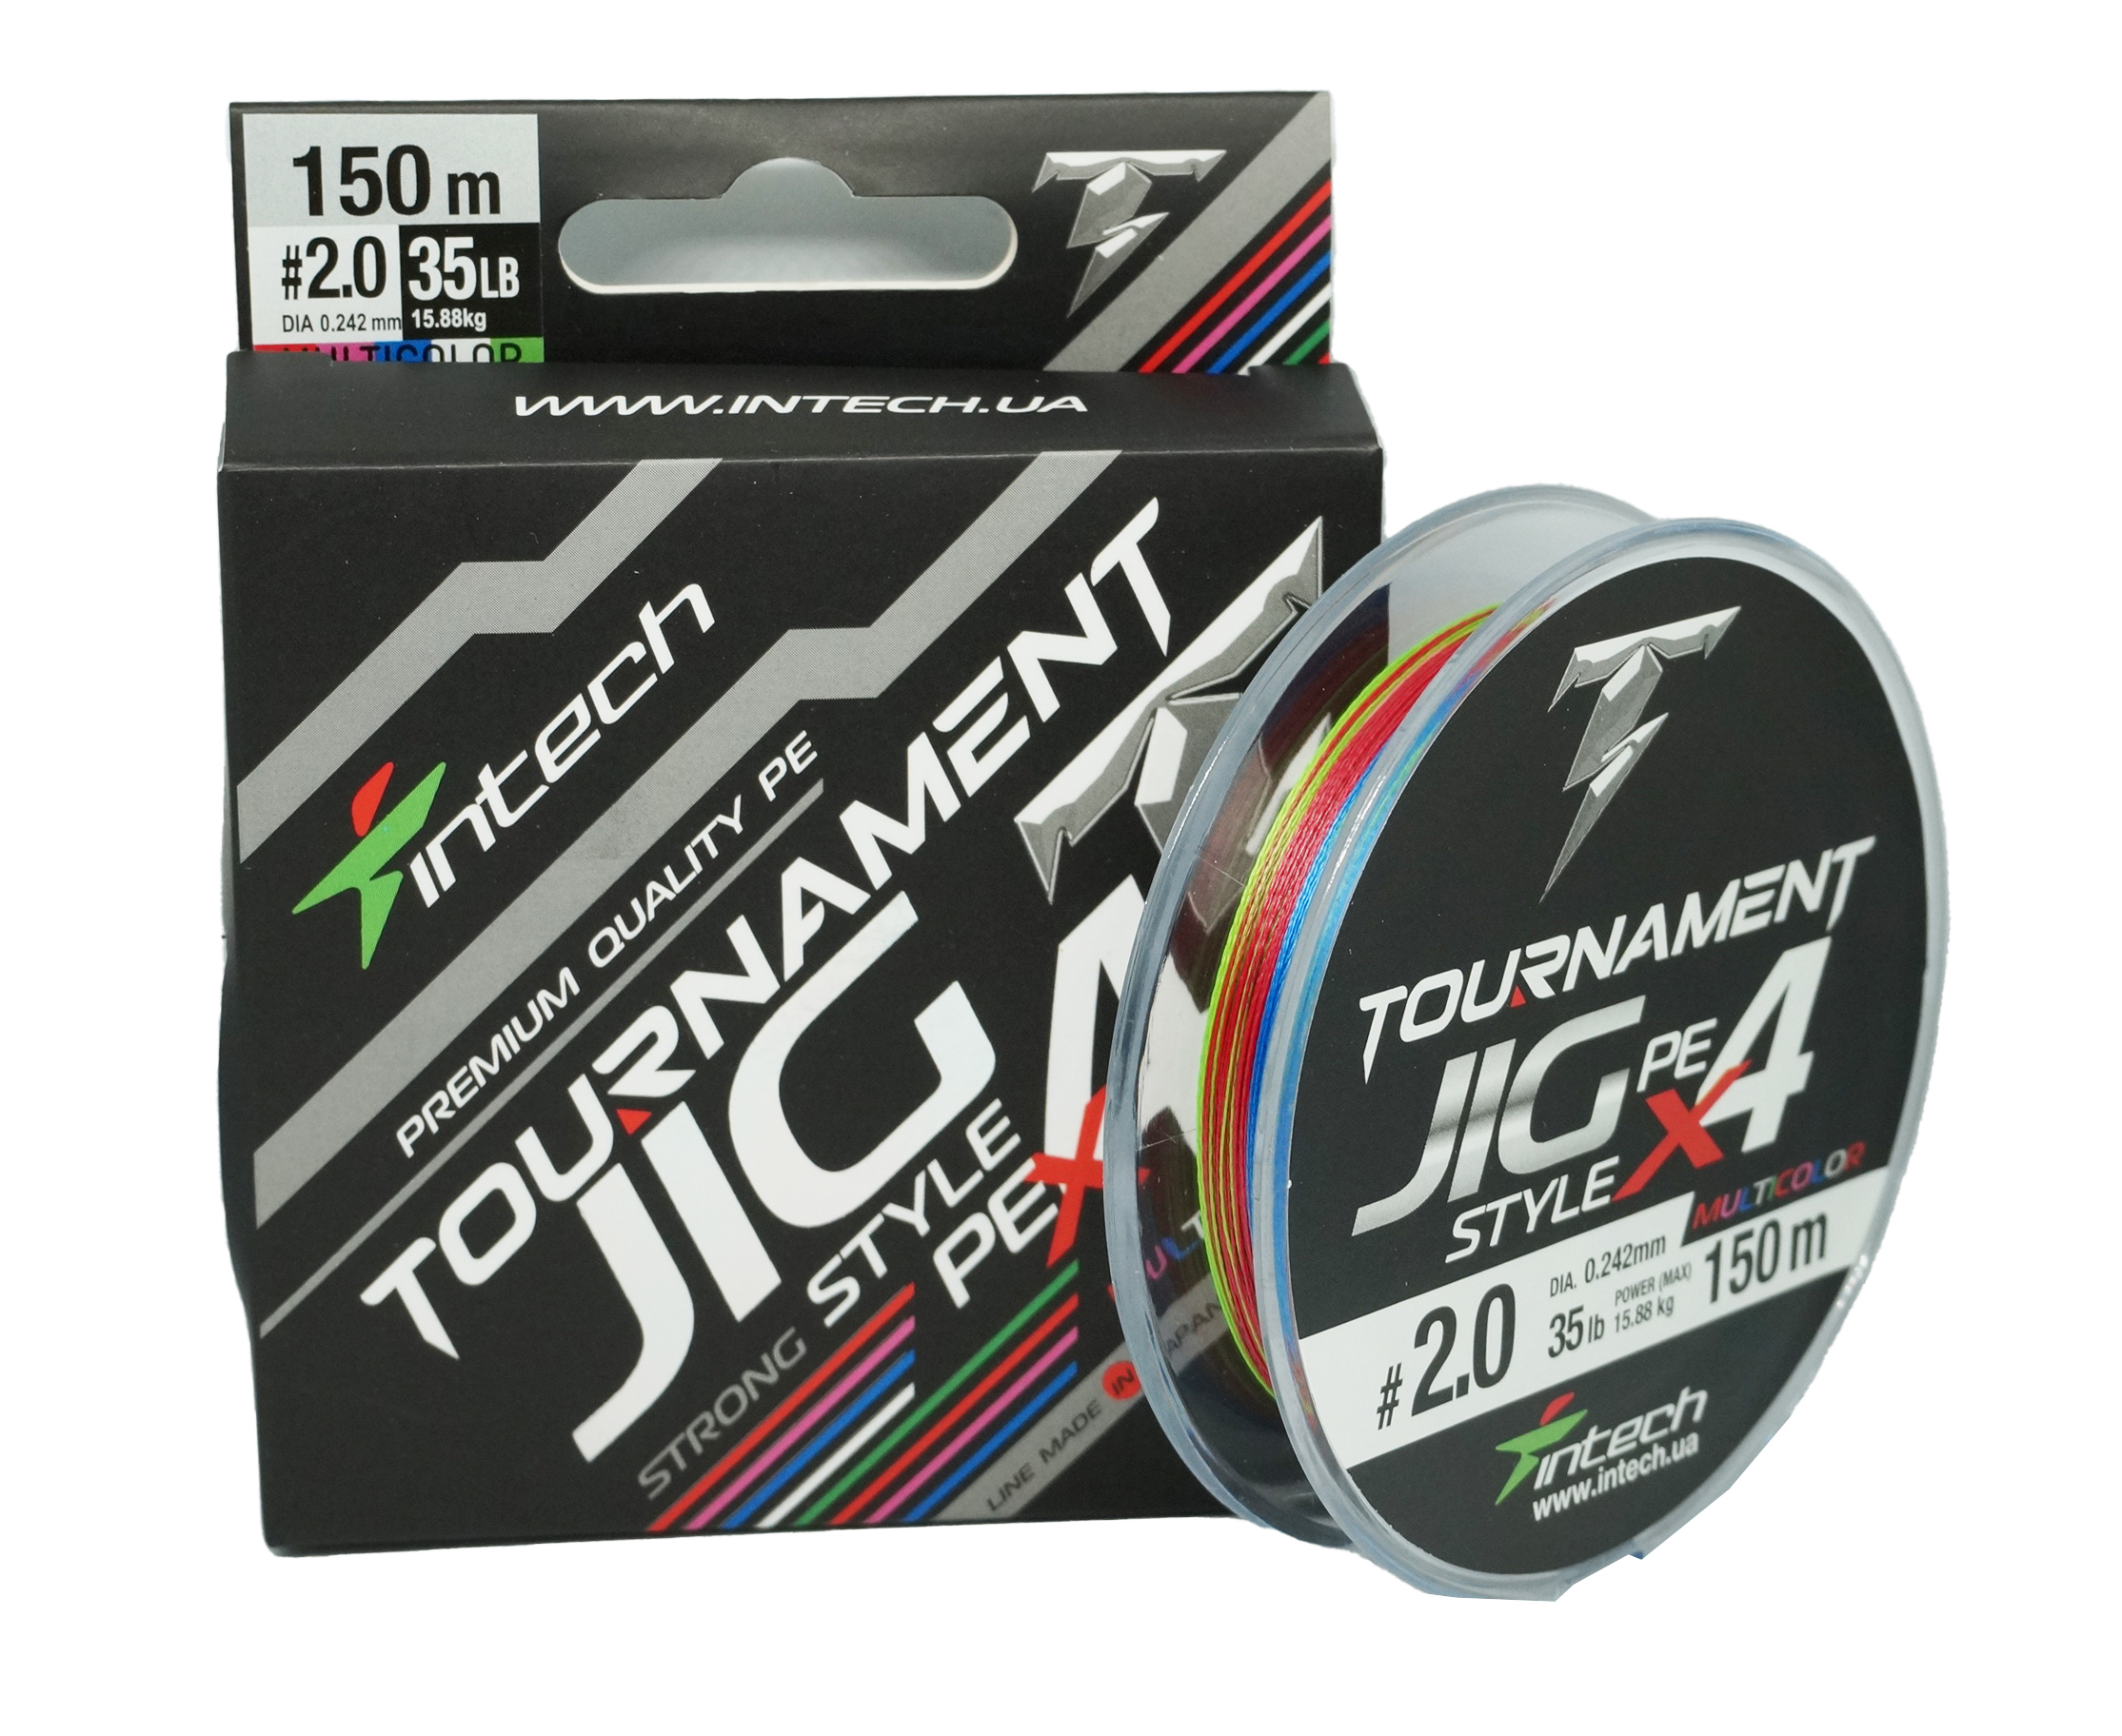 Шнур Intech Tournament jig style PE X4 150м 2,0 35lb 15,88кг multicolor - фото 1